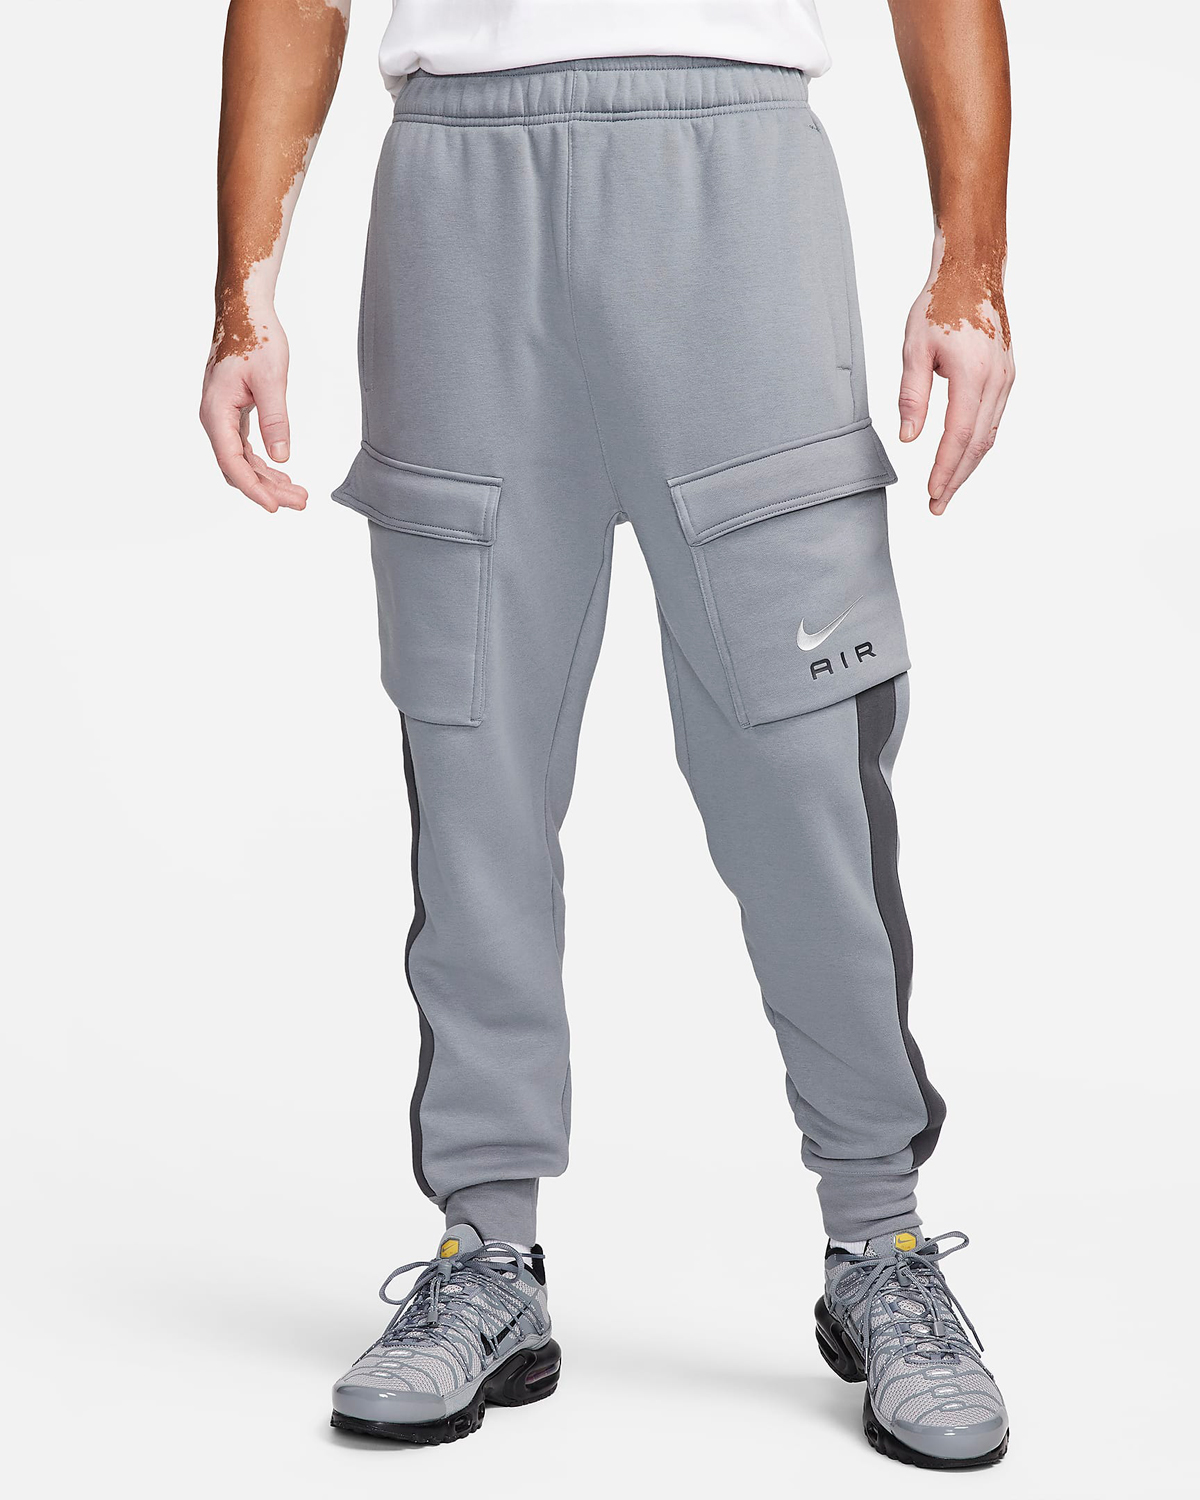 Nike-Air-Fleece-Cargo-Pants-Cool-Grey